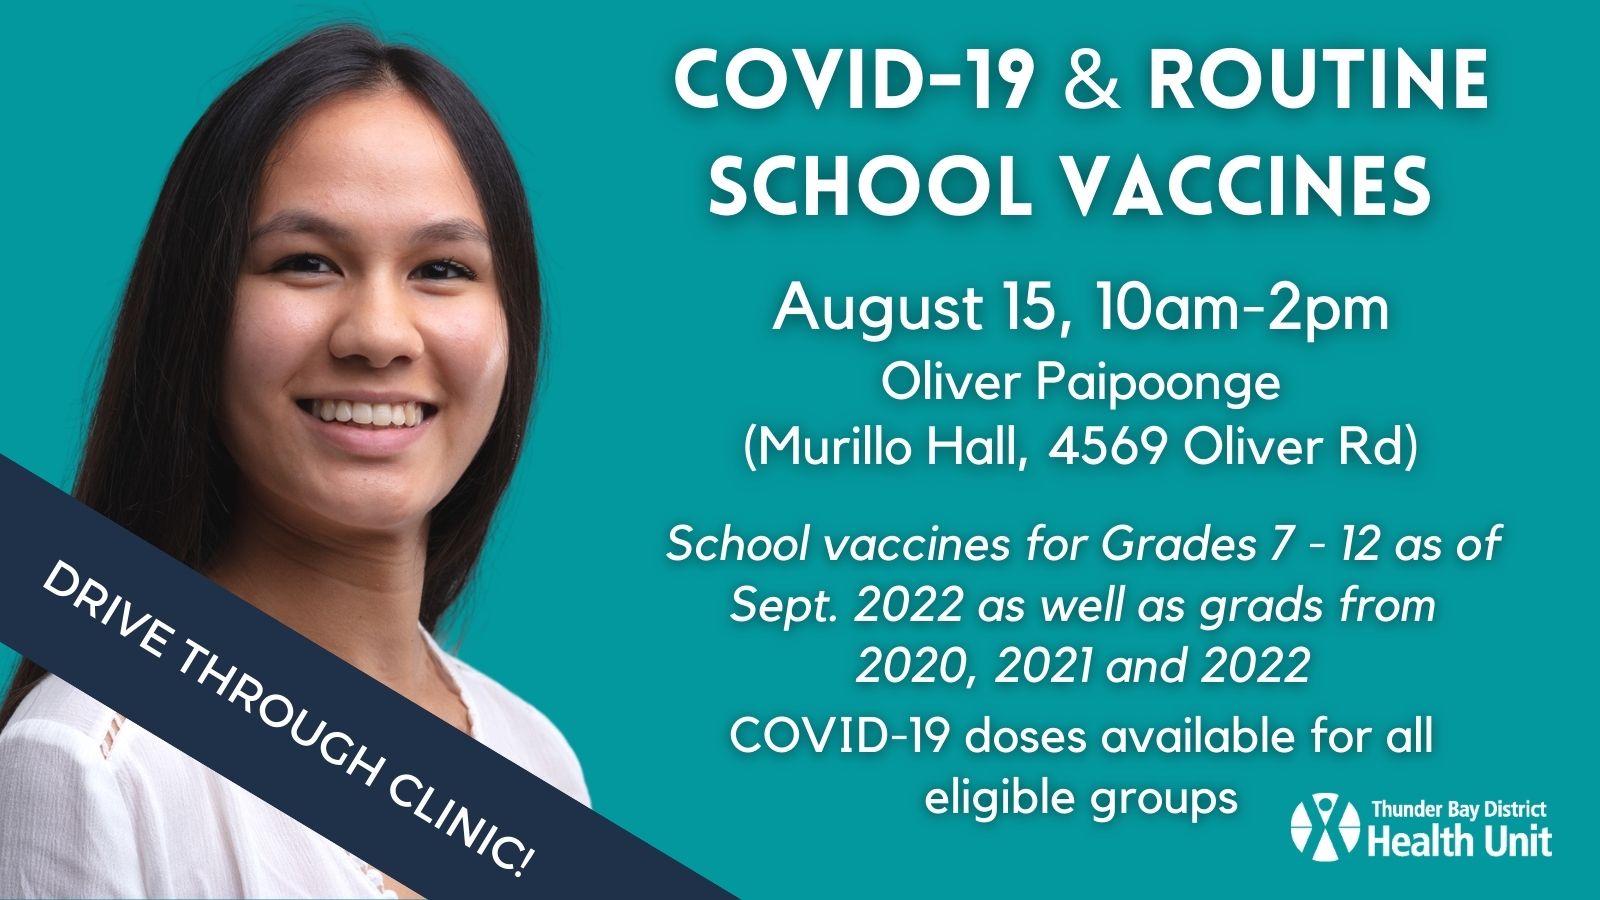 TBDHU COVID-19 and Routine School Vaccine Drive Through Clinic